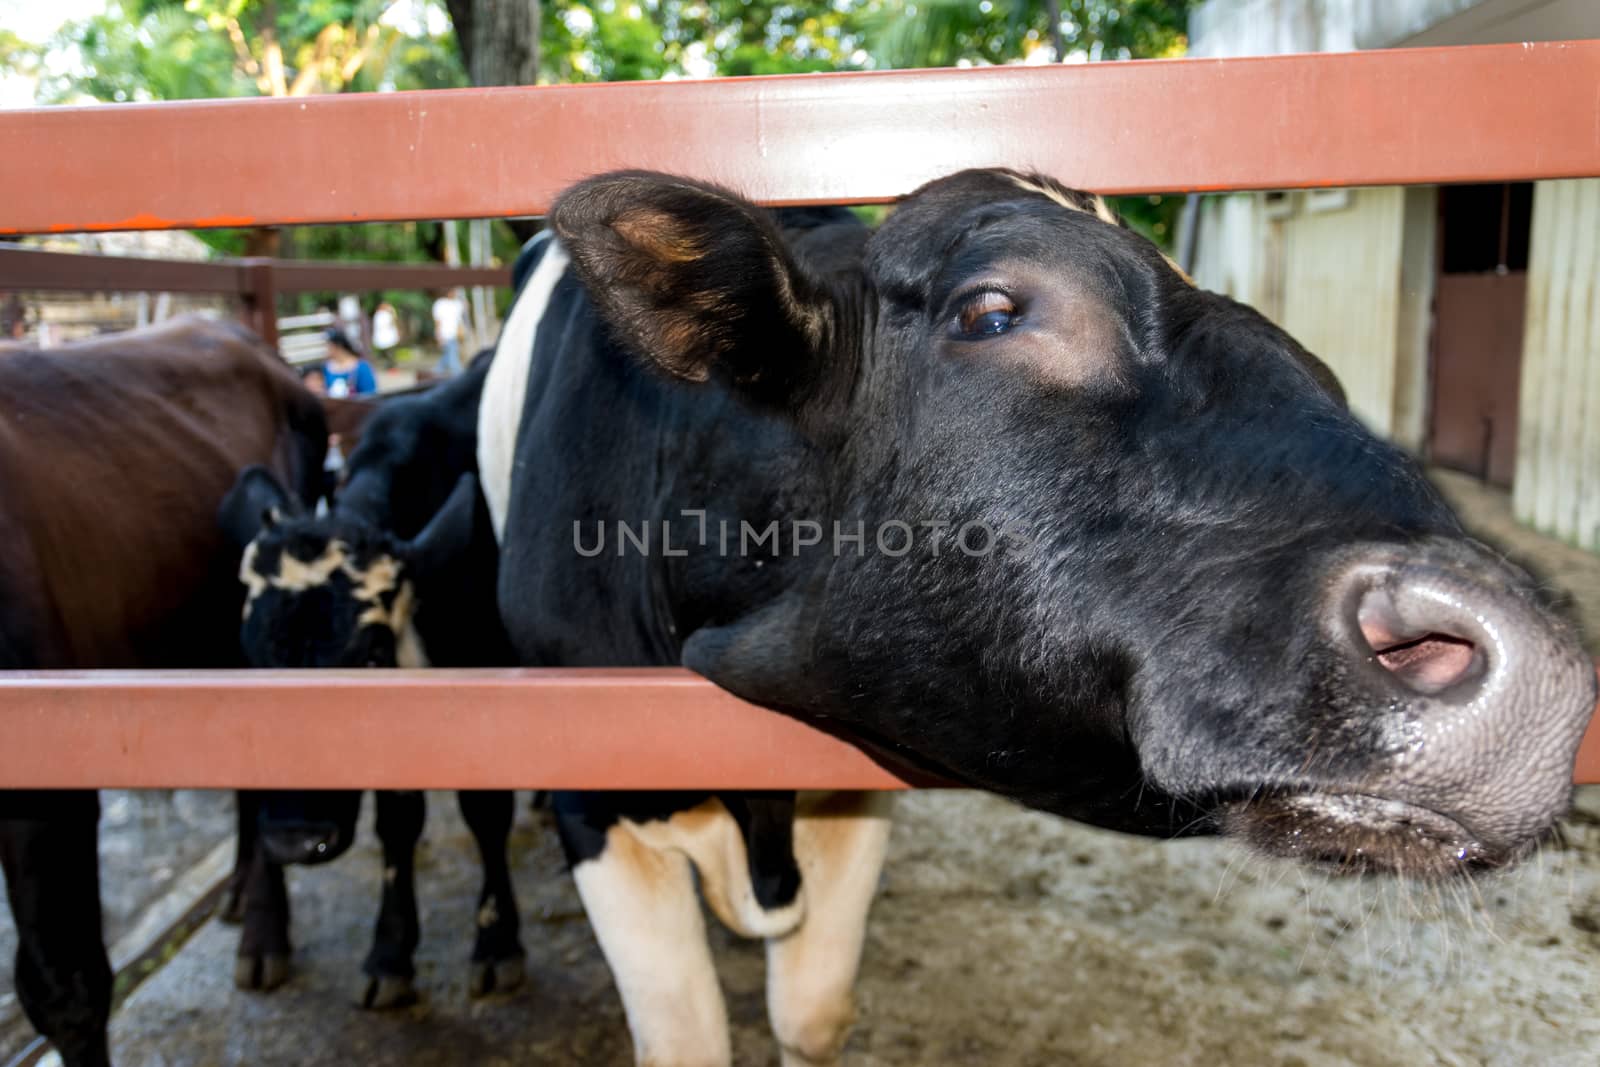 Closeup milk cow in the zoo.